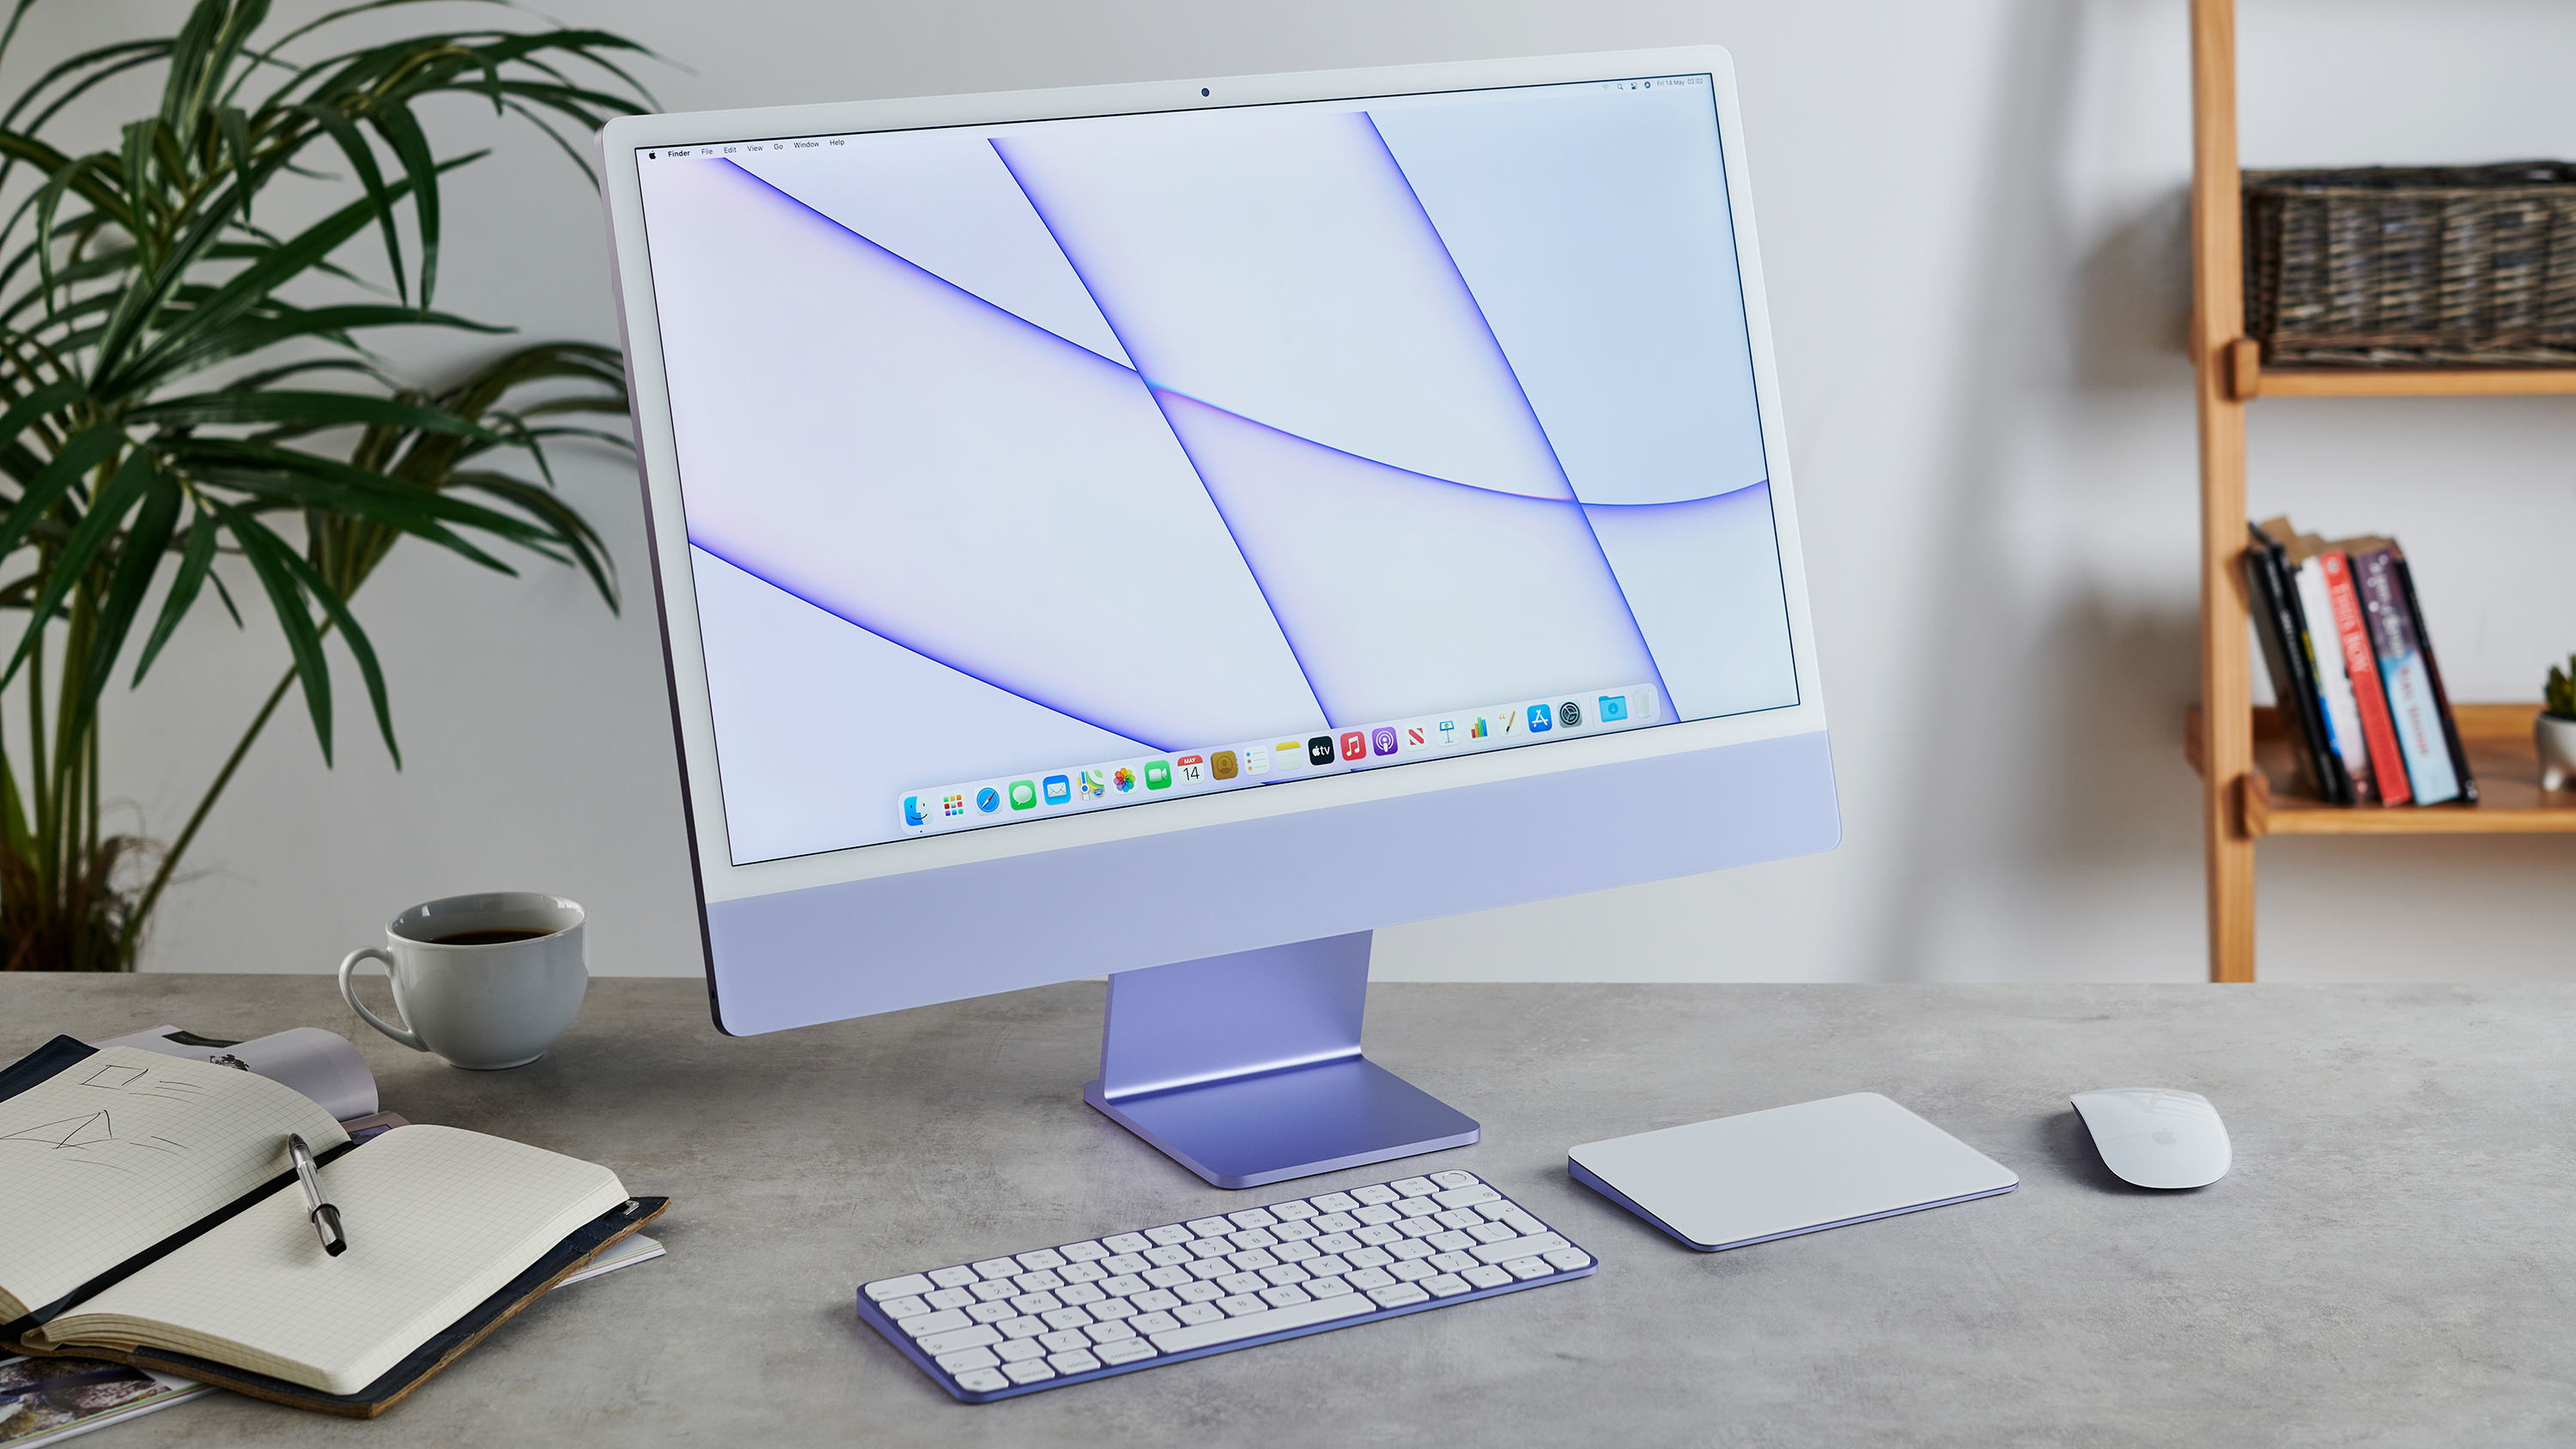 iMac (24-inch, 2021) shown on a desk